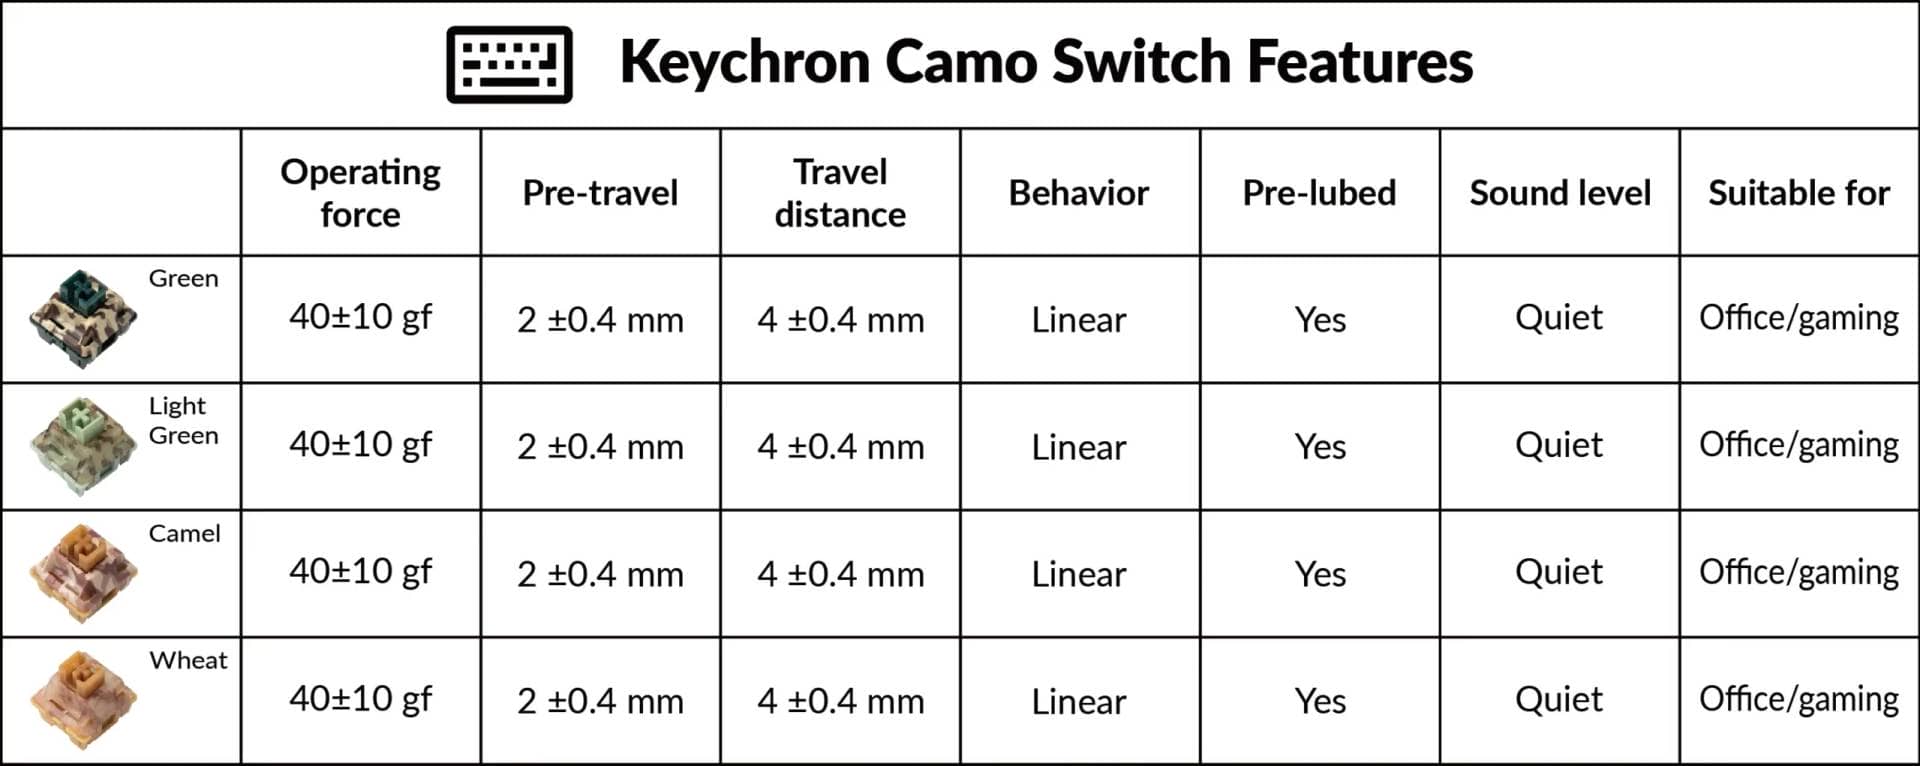 Keychron Camo Switch Features ddb06440 6661 4630 b612 8cbbcc15c5c6 scaled